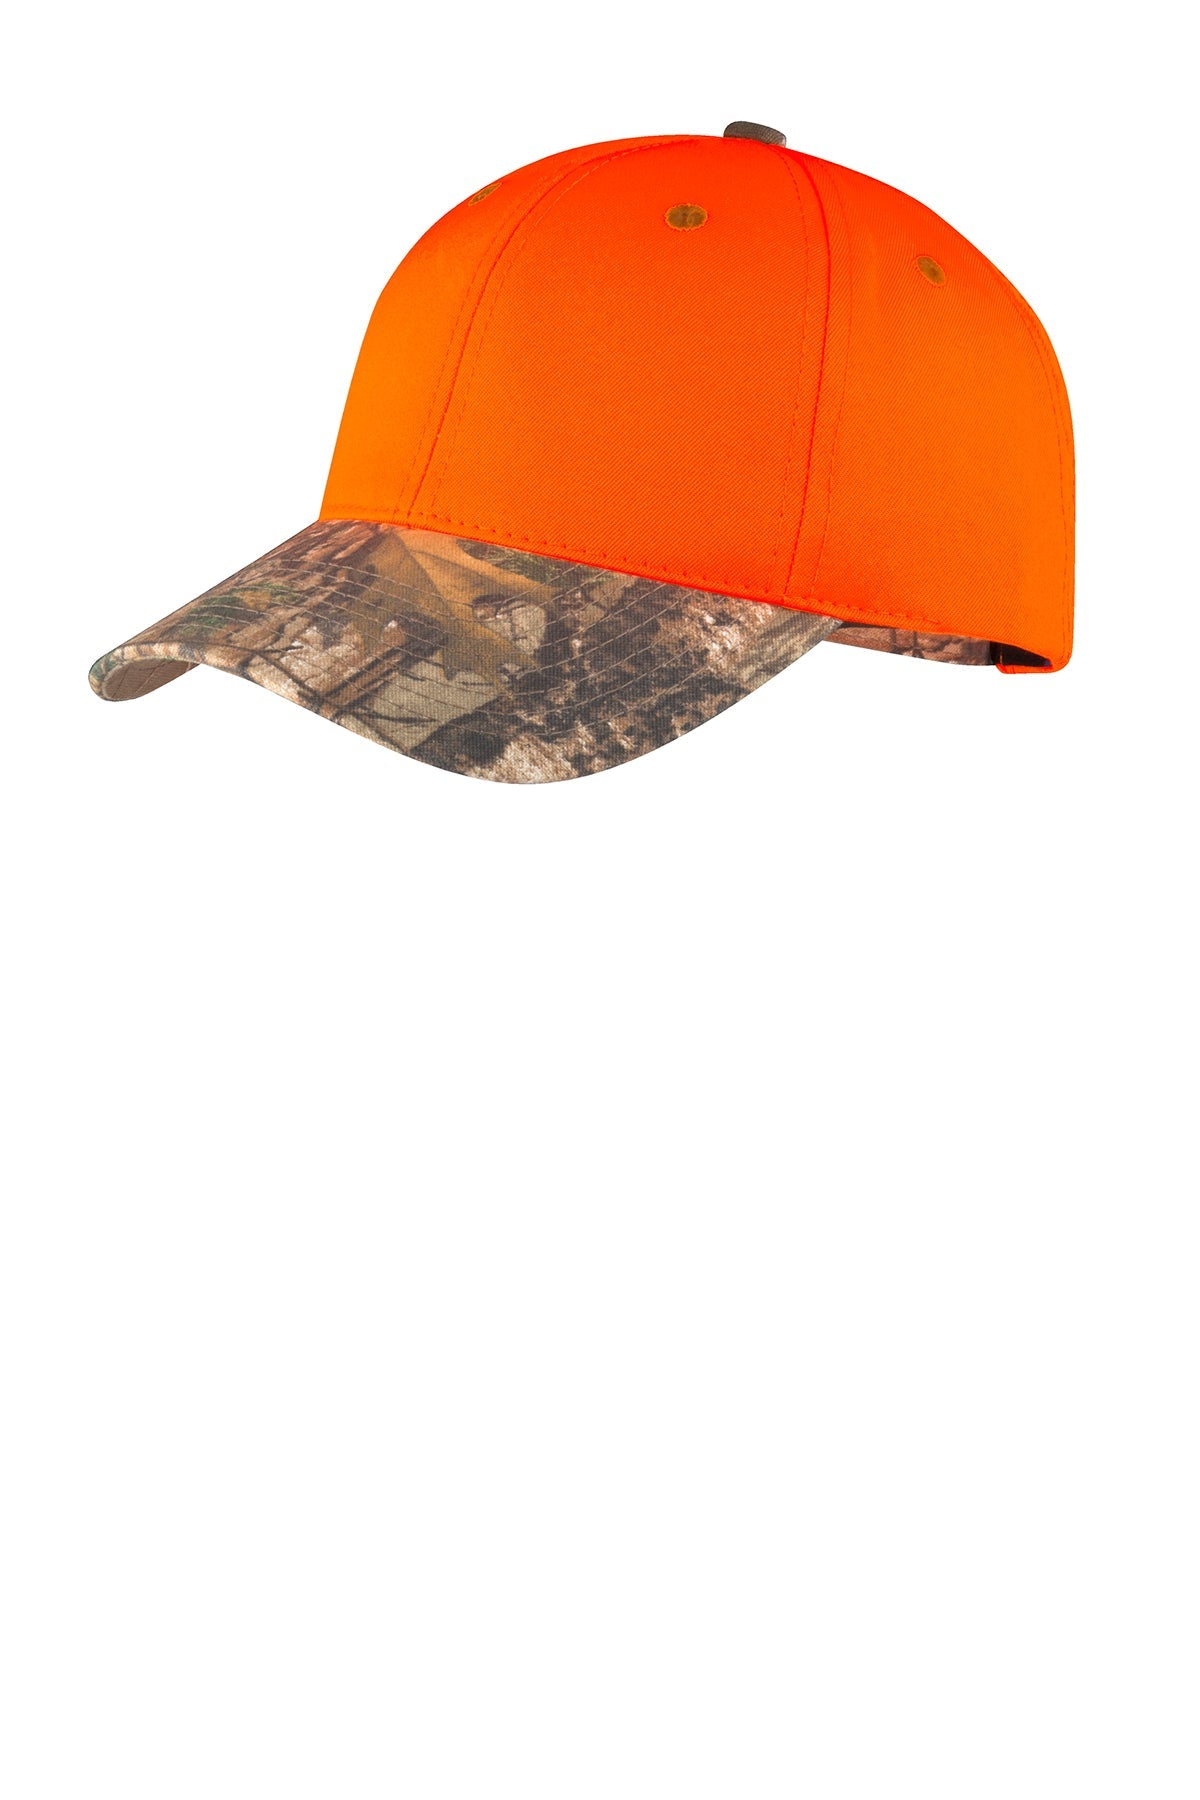 Port Authority Enhanced Visibility Branded Caps with Camo Brim, Orange Blaze/ Realtree Xtra